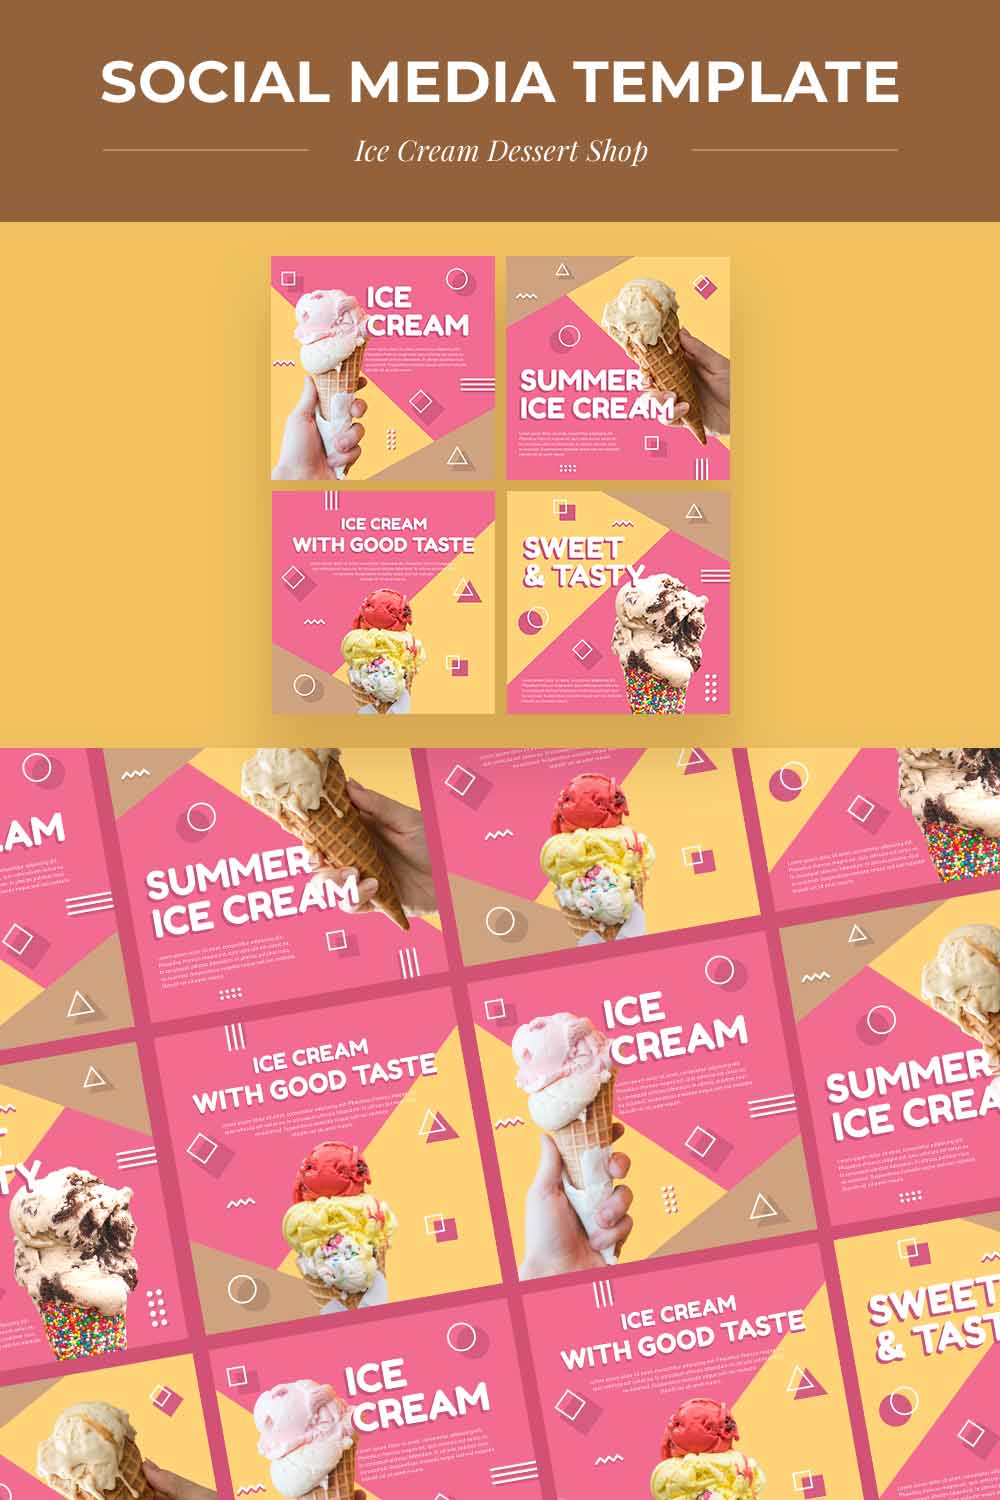 Ice Cream Dessert Shop Social Media Banner Template pinterest image.